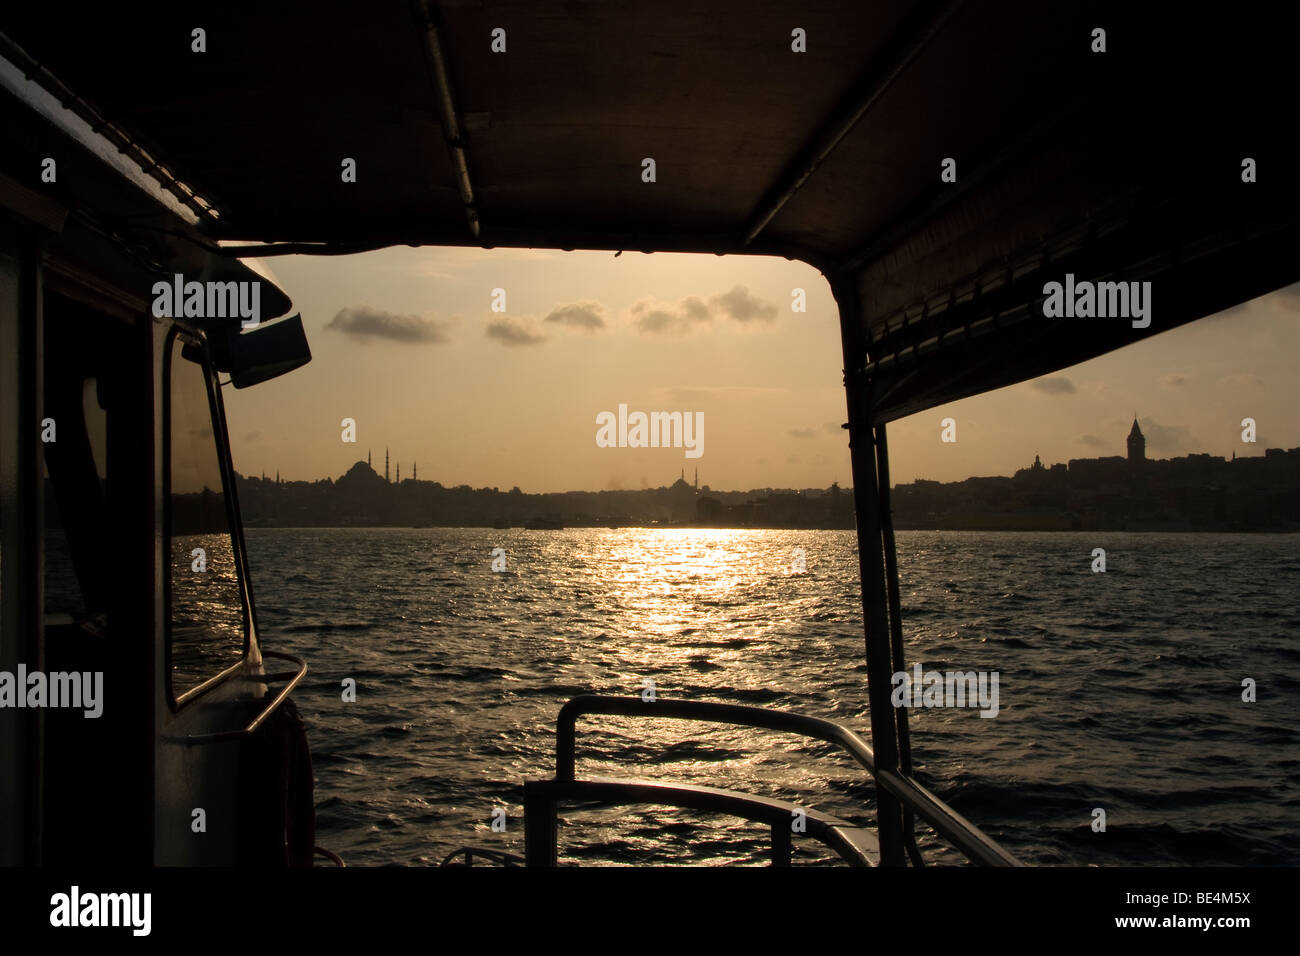 istanbul lanscape Stock Photo